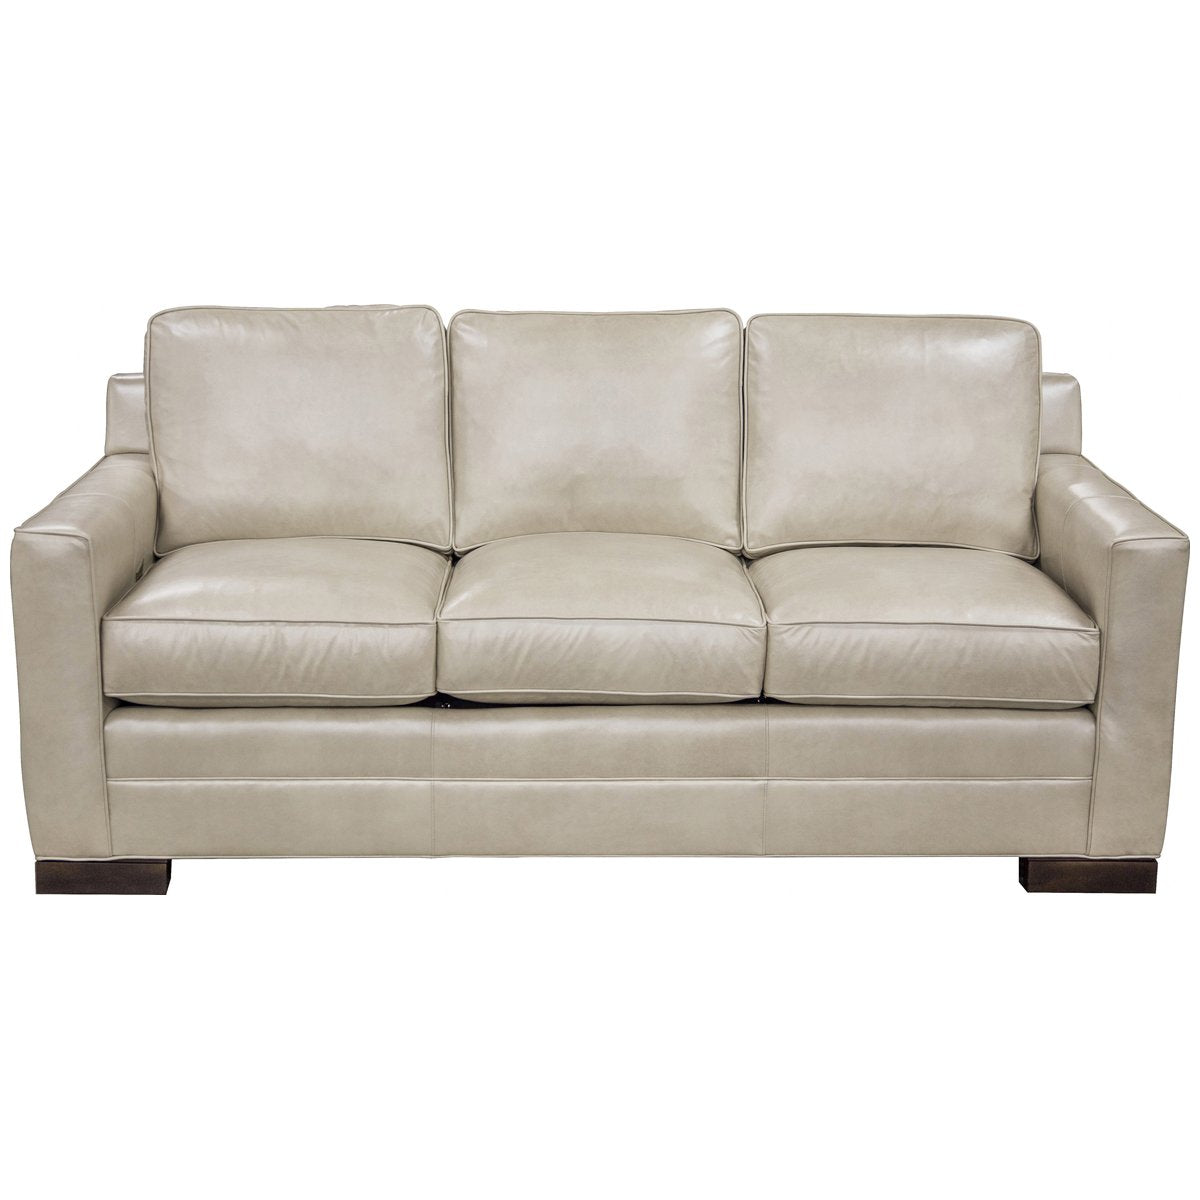 Vanguard Furniture Summerton Sofa